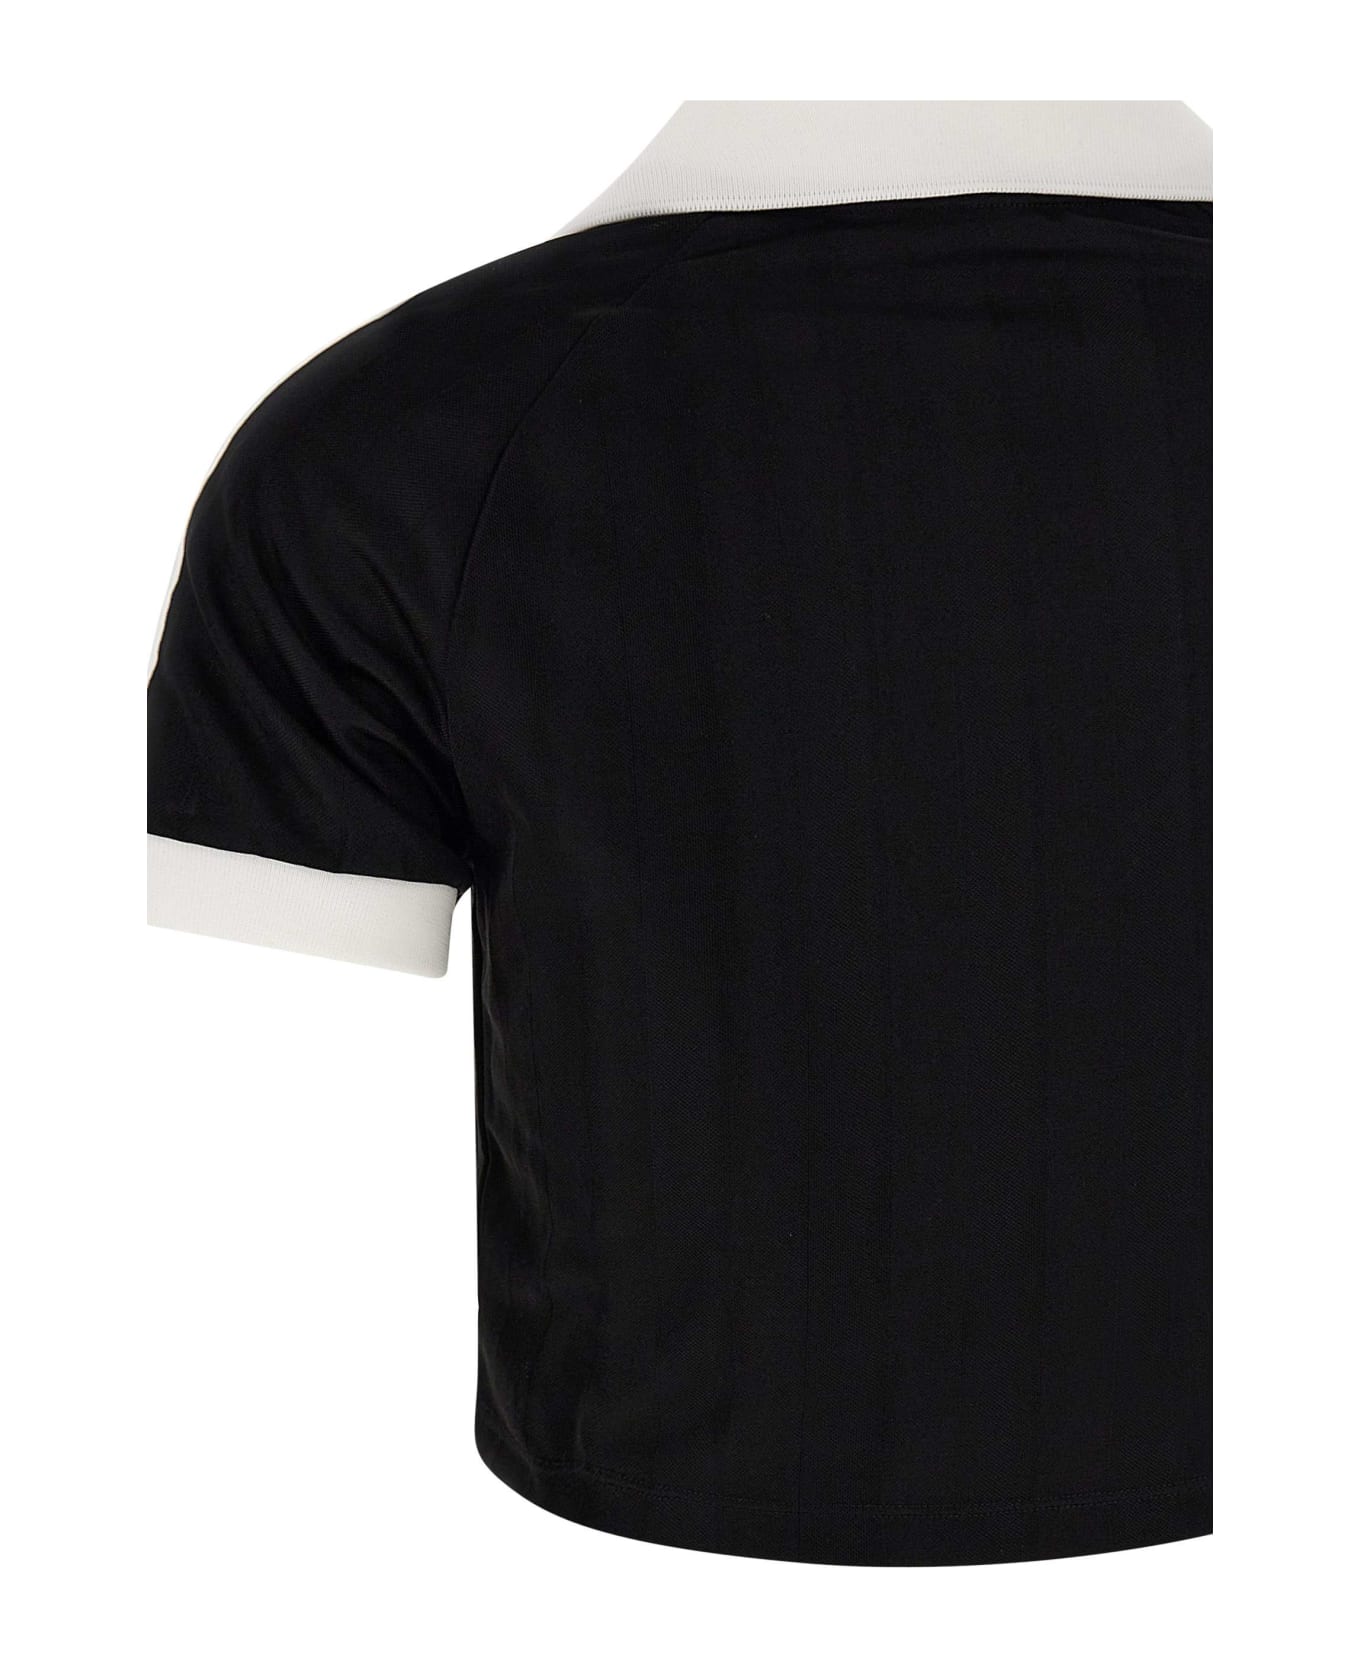 Adidas "soccer" Top - BLACK Tシャツ